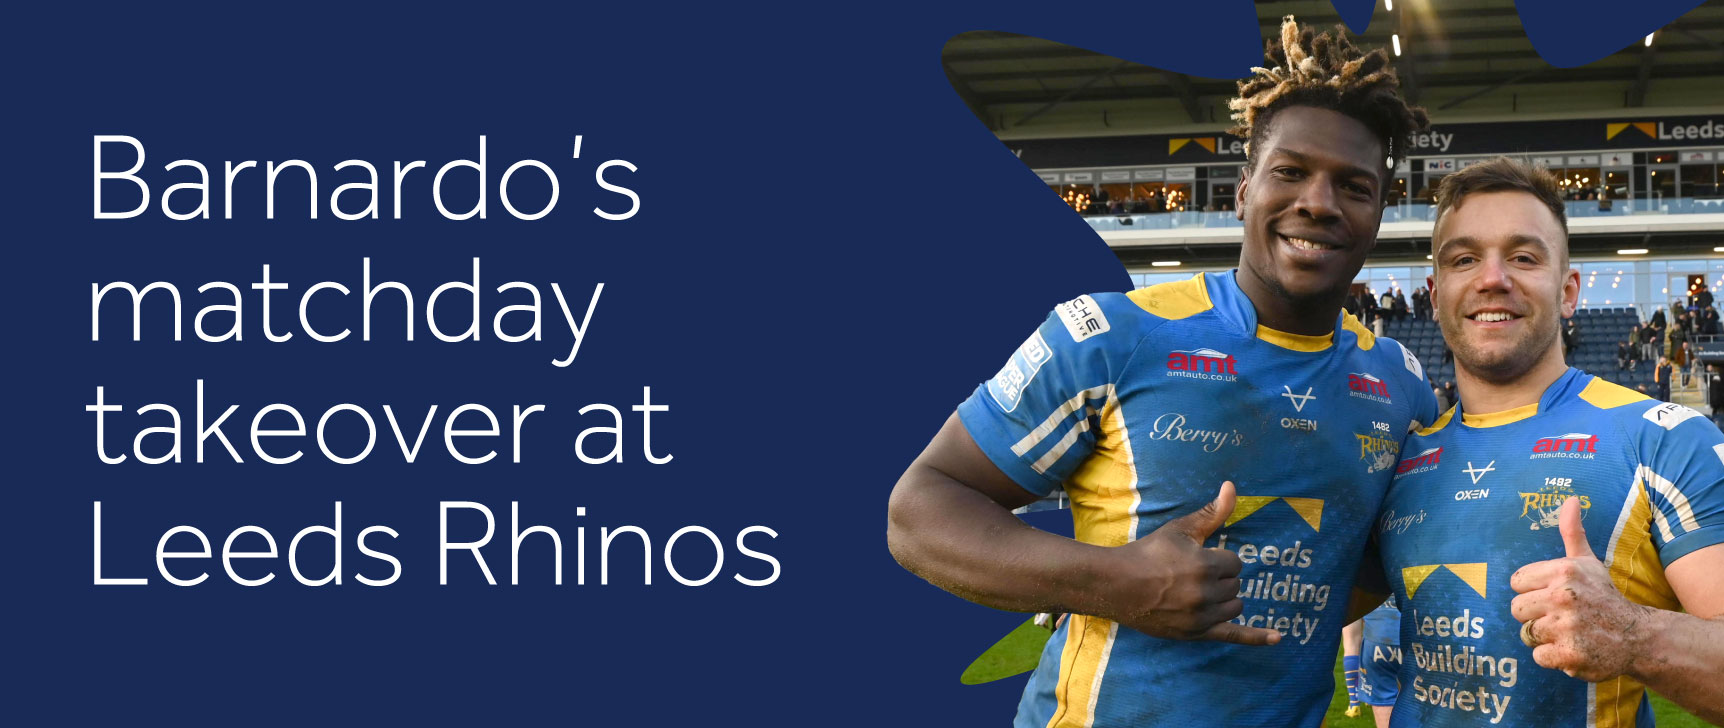 Barnardo's matchday takeover at Leeds Rhinos